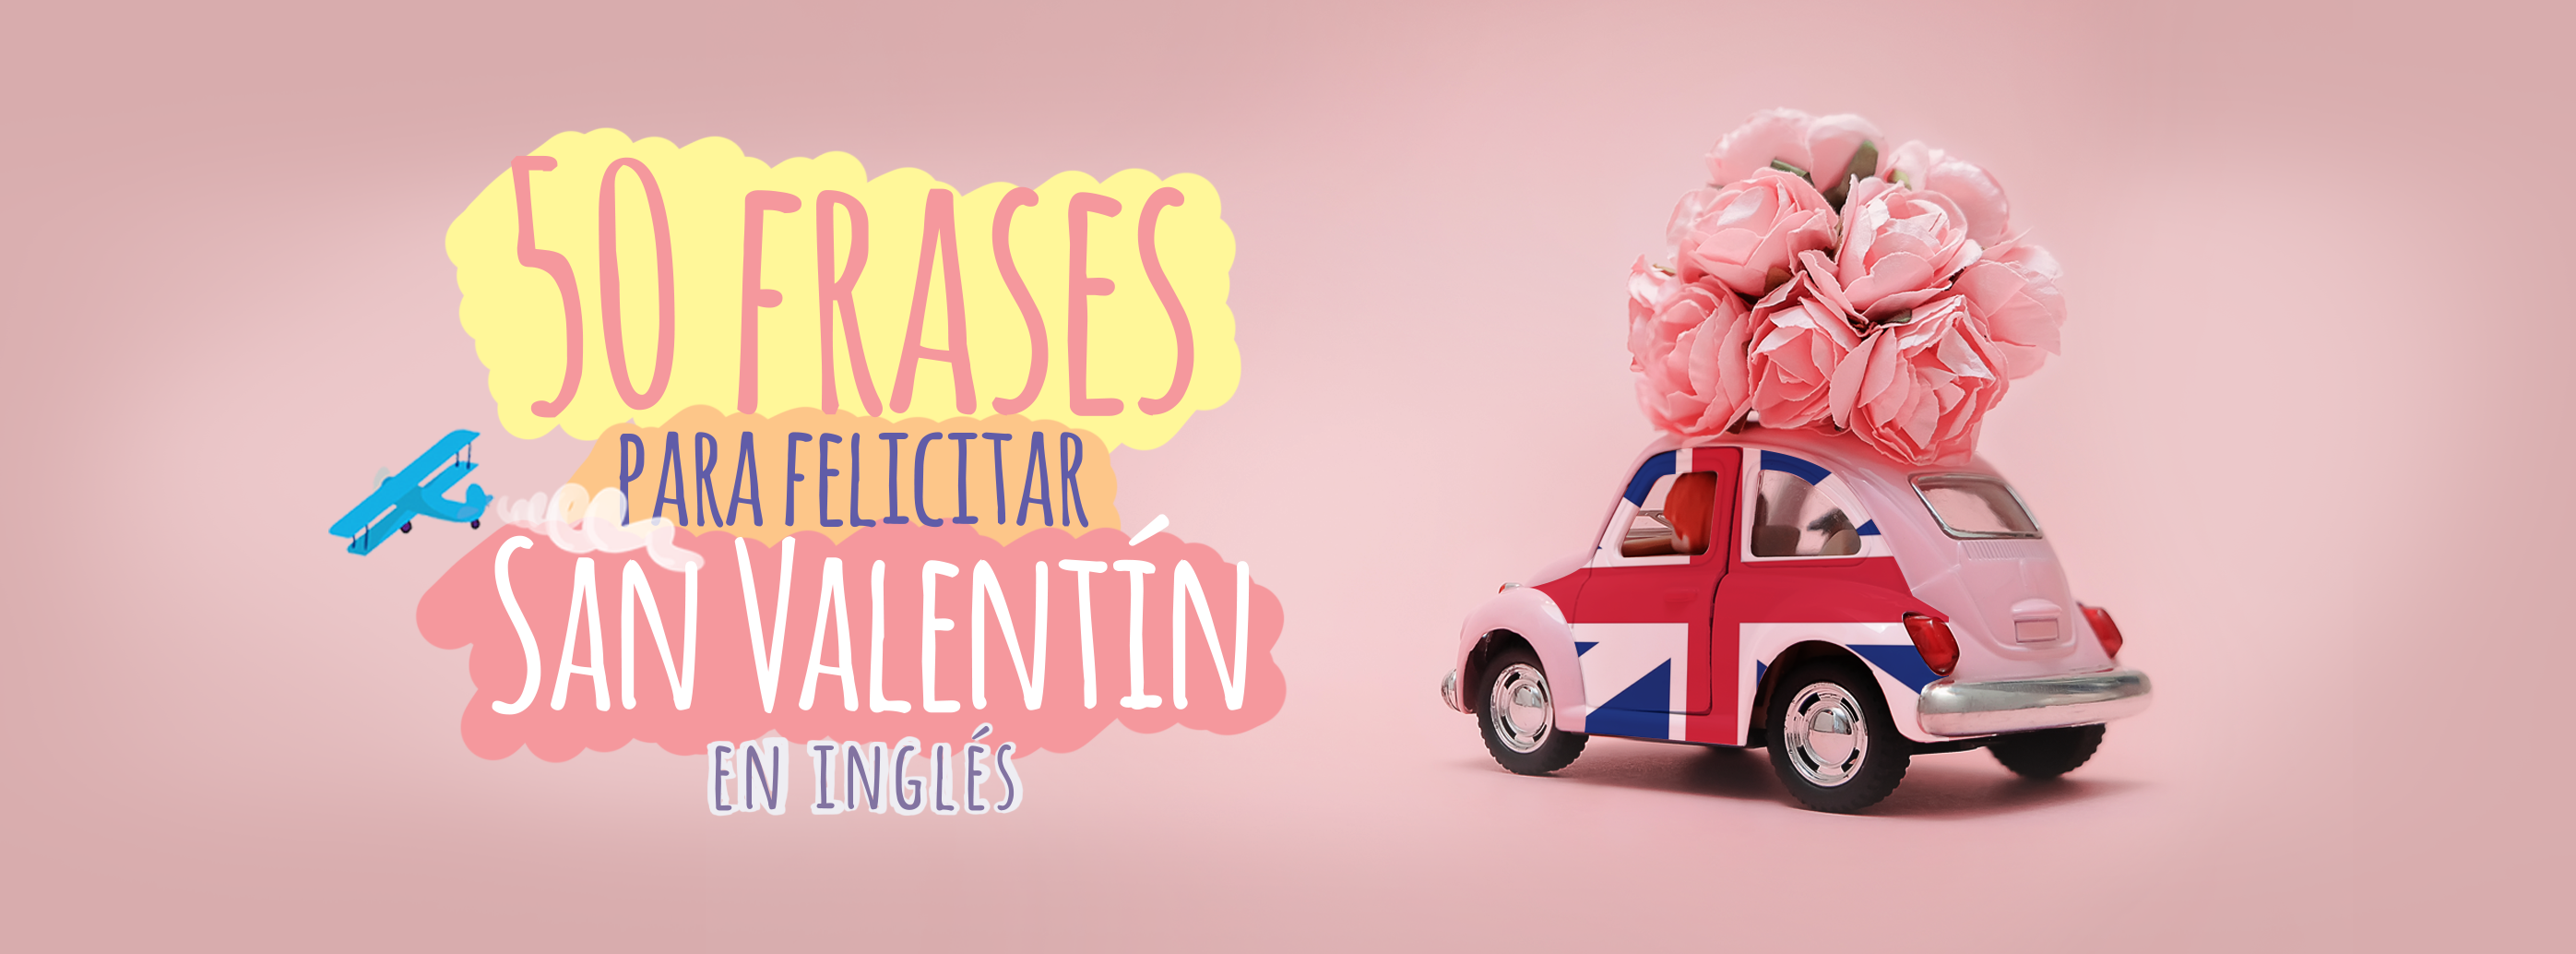 50 Frases para felicitar San Valentín en inglés 